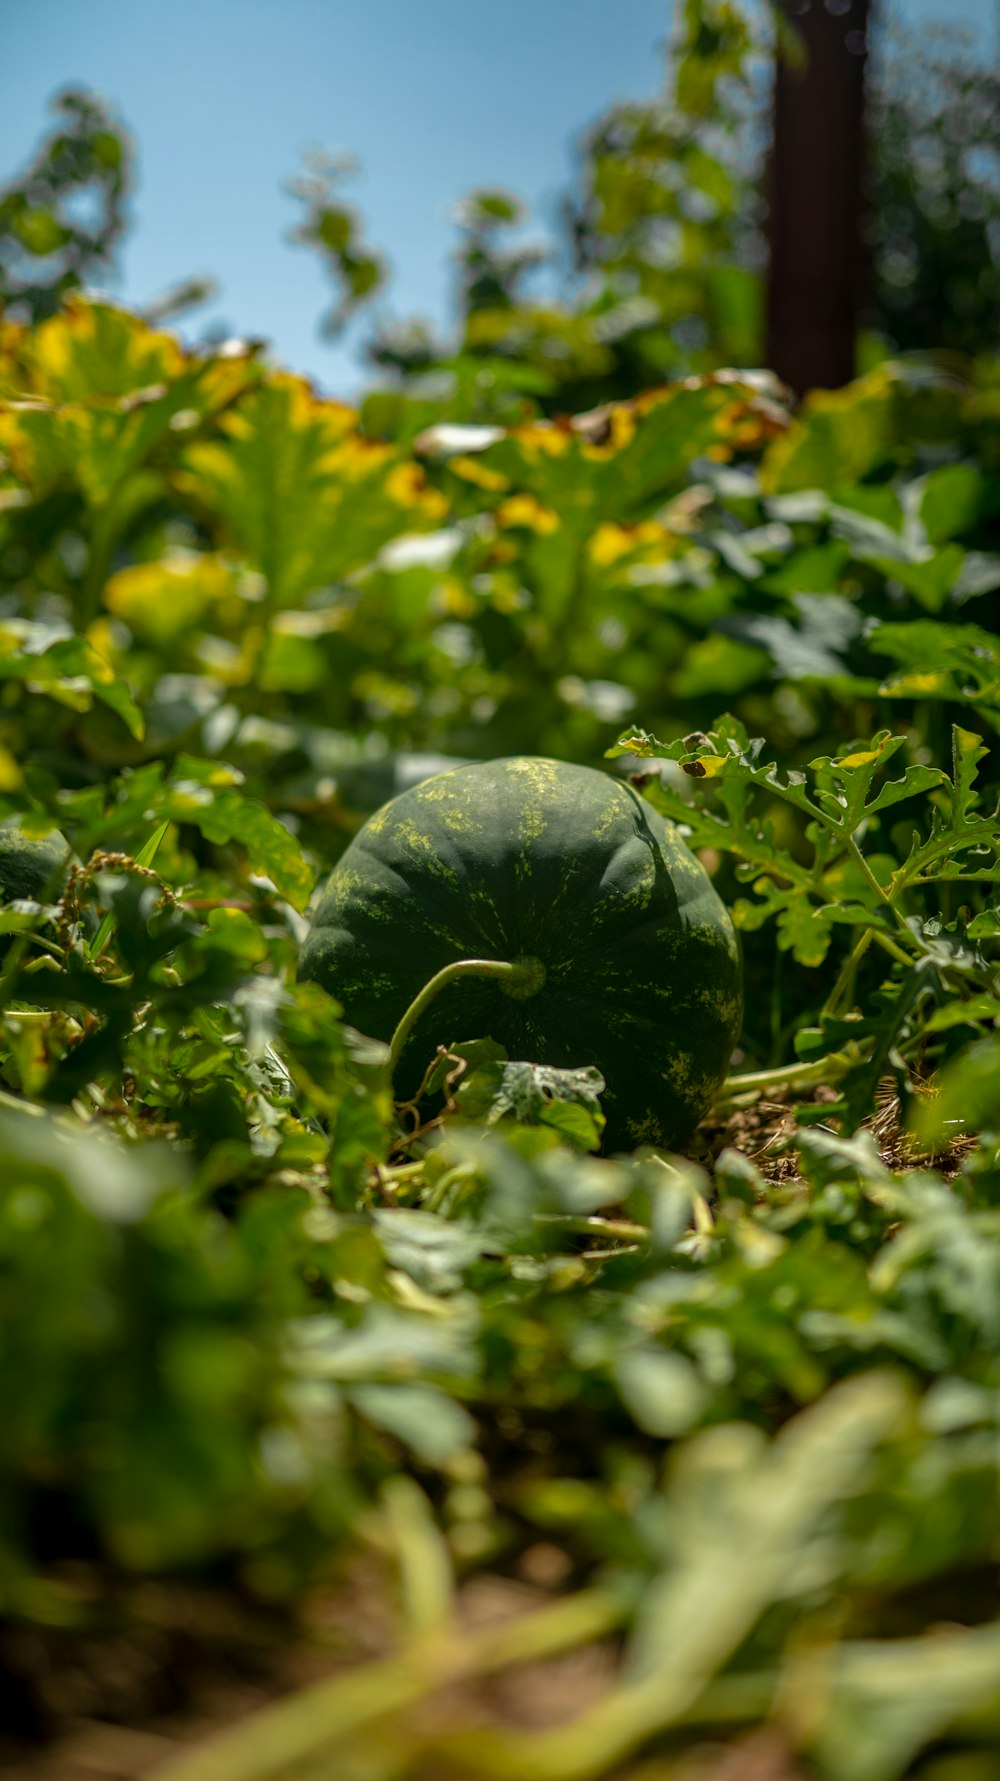 a green turtle on a bush